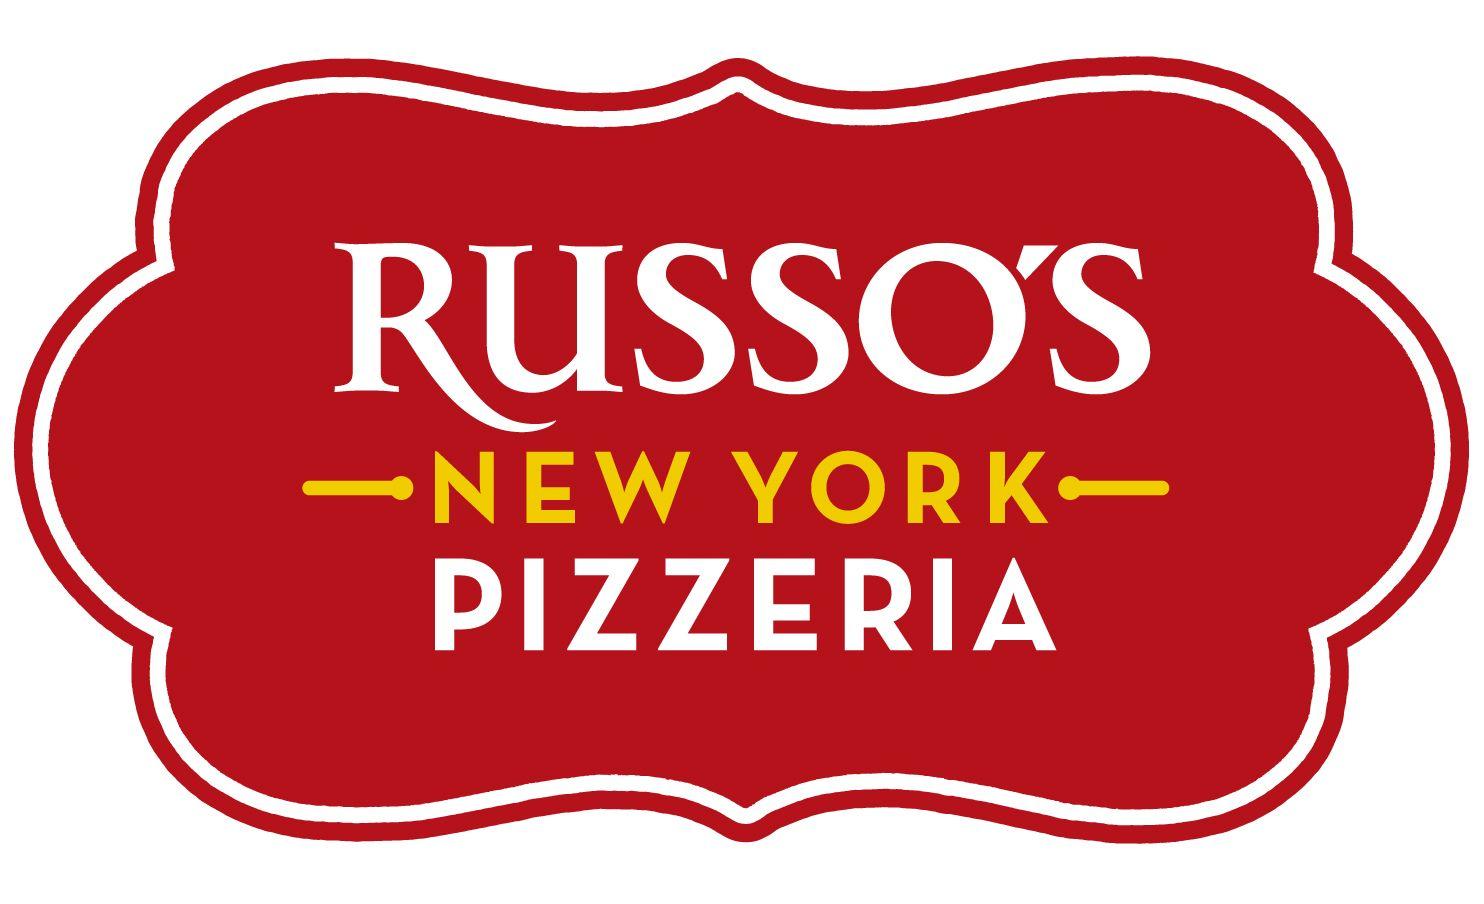 Russo Logo - File:Russo's New York Pizzeria Logo.jpg - Wikimedia Commons